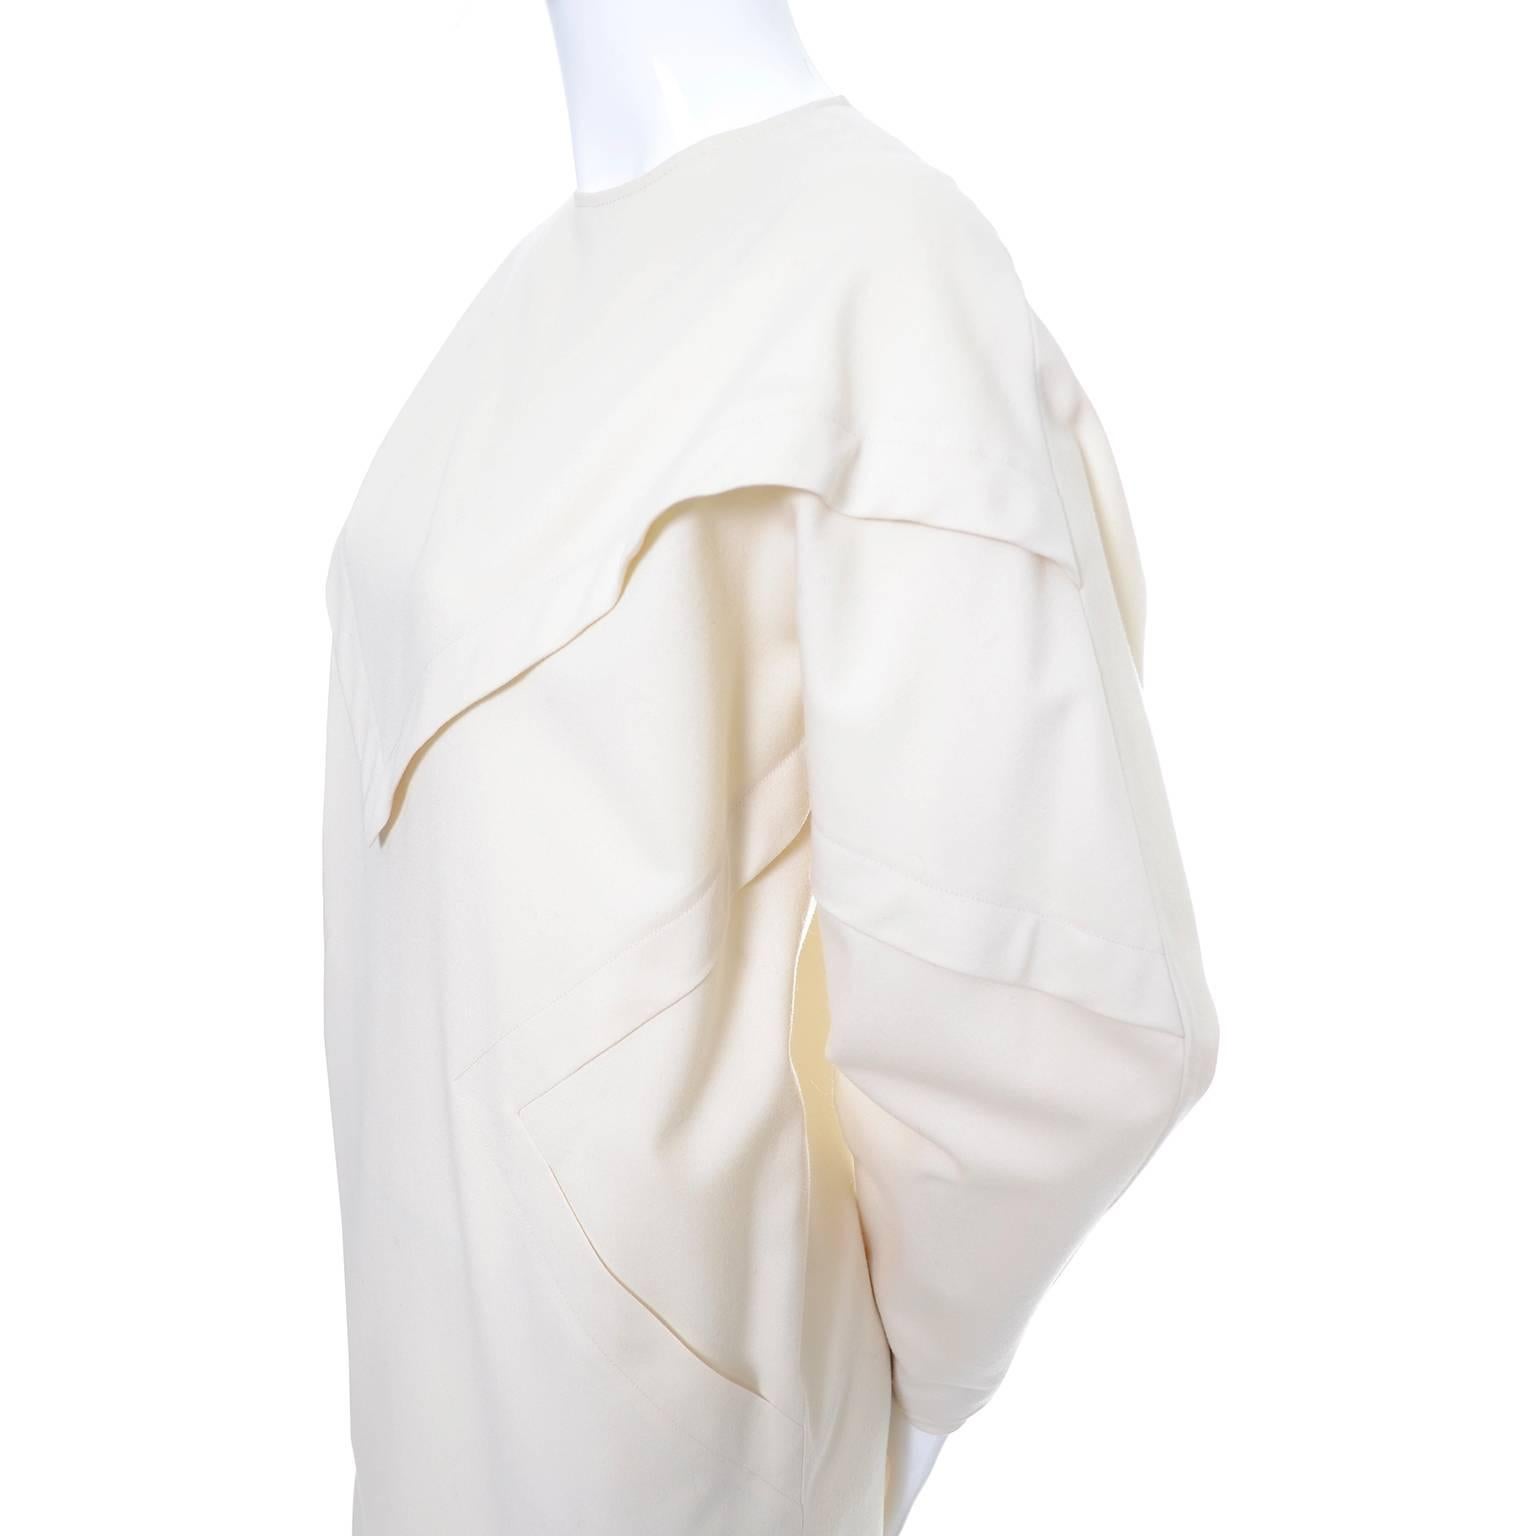 Gray Ronaldus Shamask Avant Garde 1980's Vintage Cream Wool Dress Size 6/8 For Sale